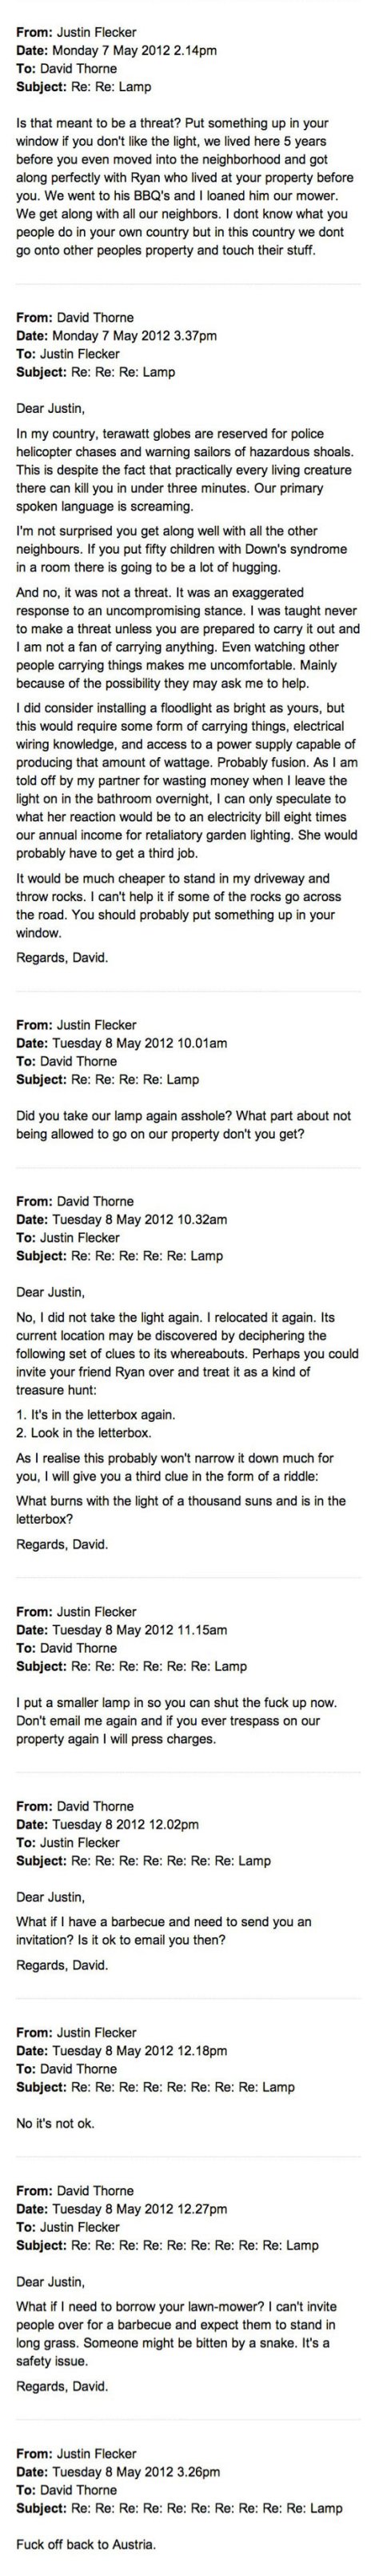 funny-Australian-troll-floodlight-neighbour-email